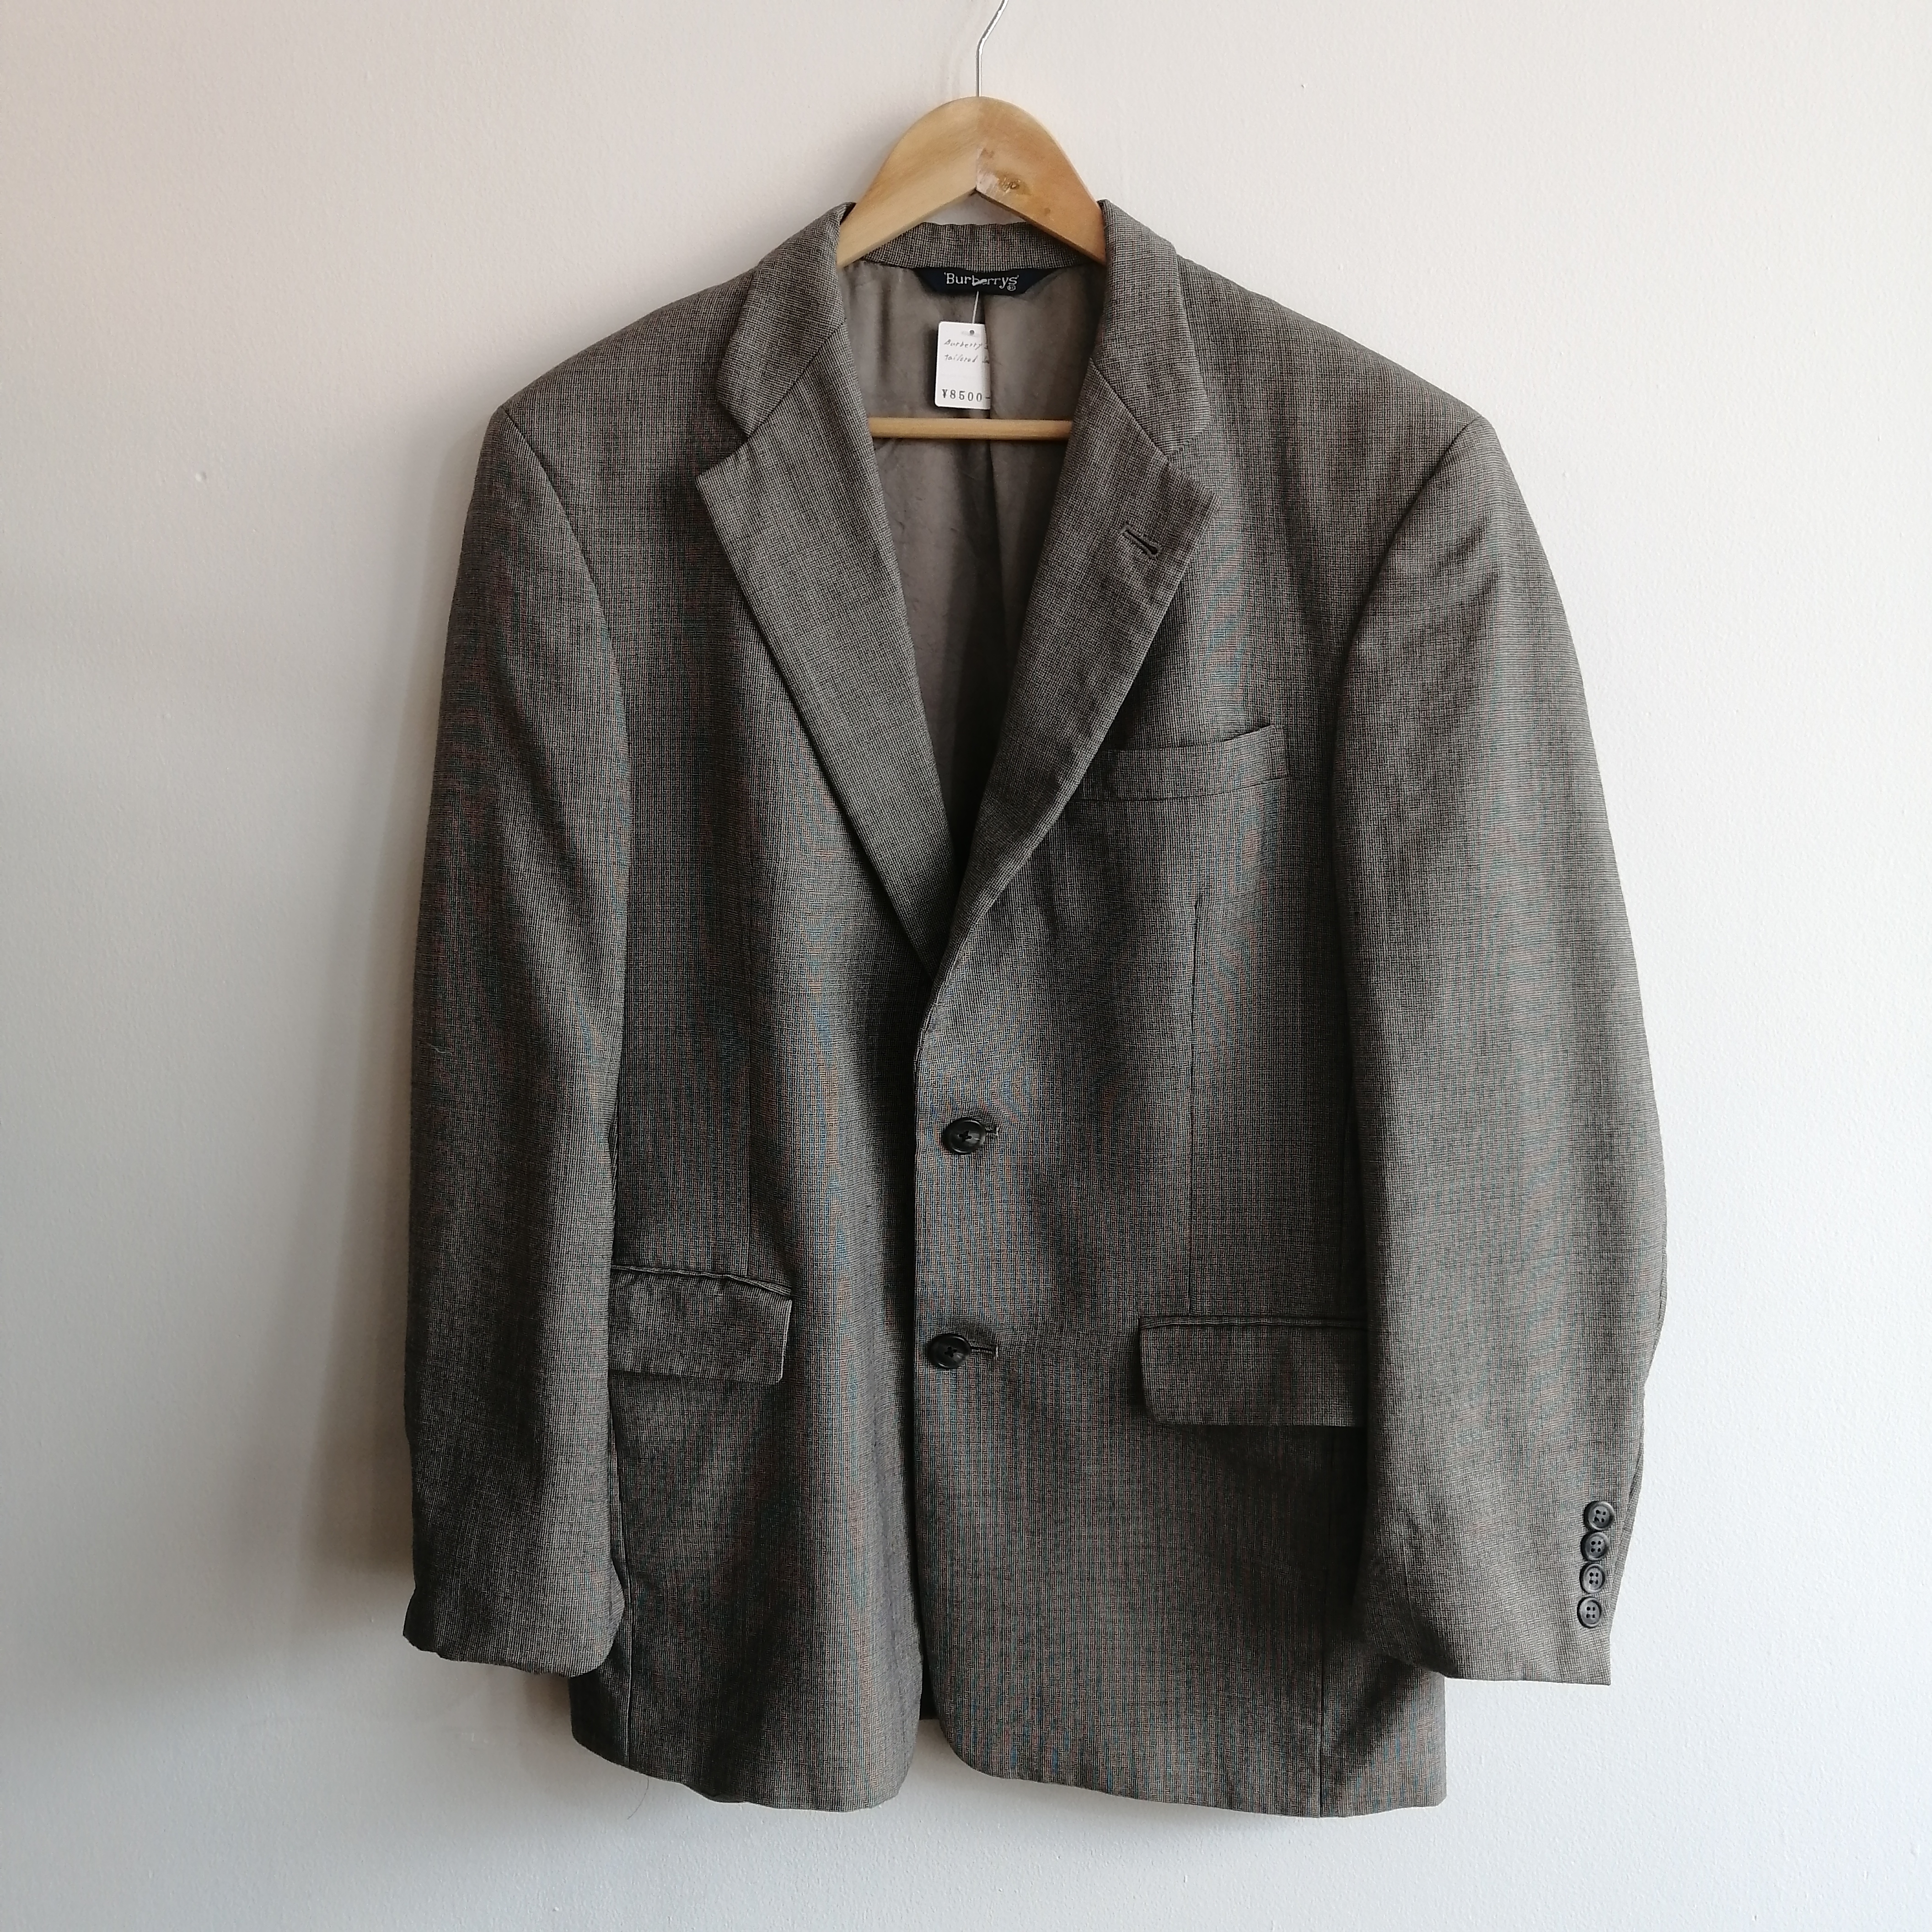 Burberrys tailored jacket